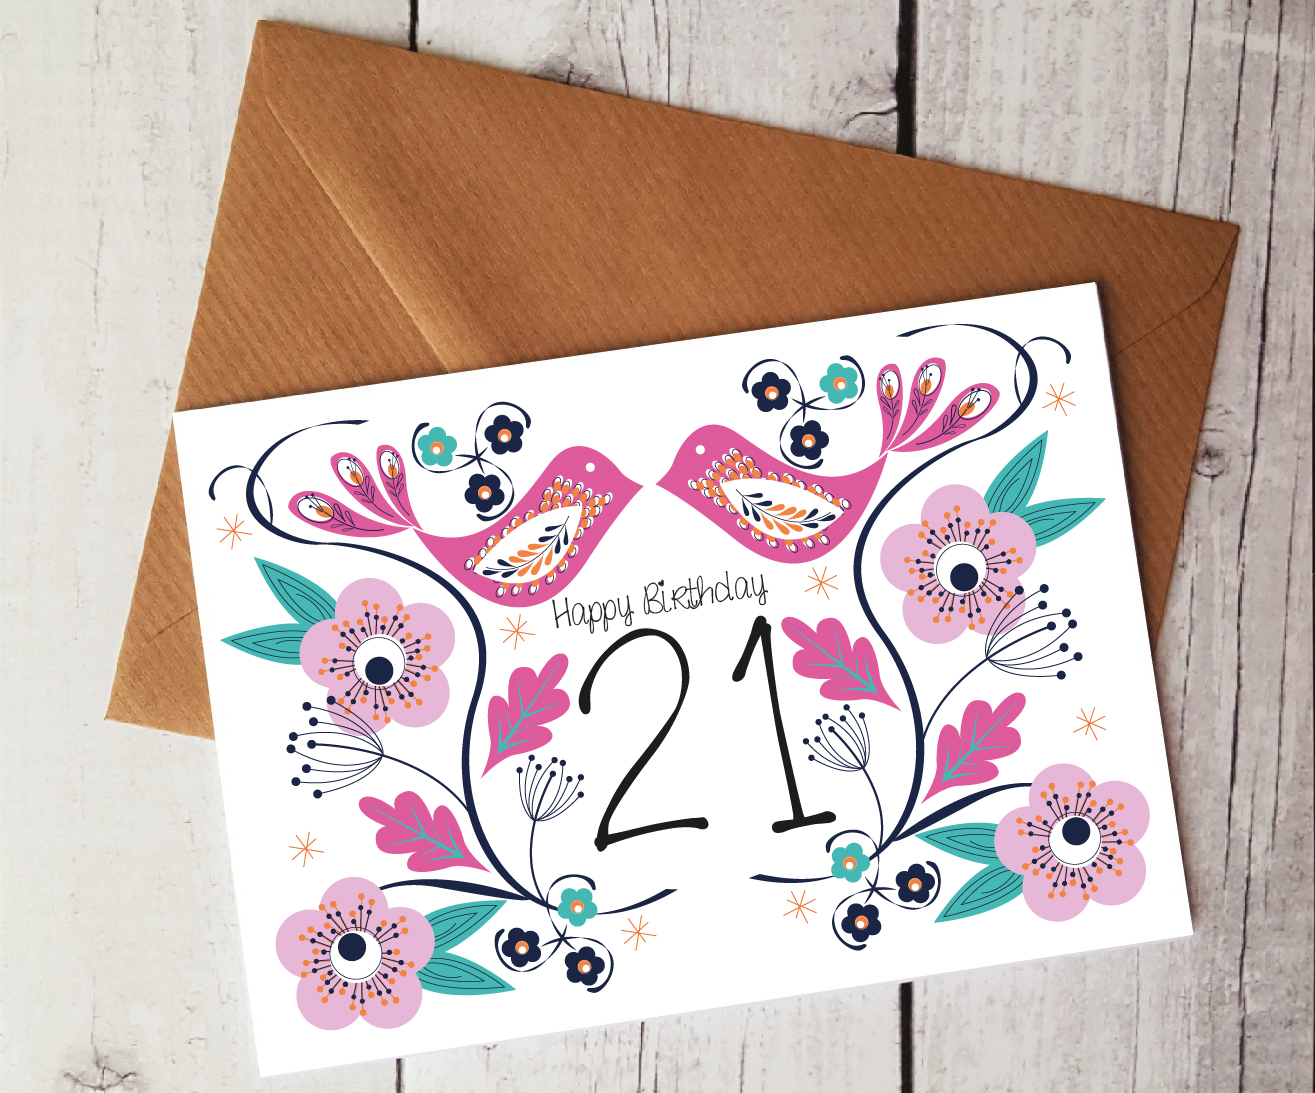 Ideas For Happy Birthday Cards 21st Birthday Card